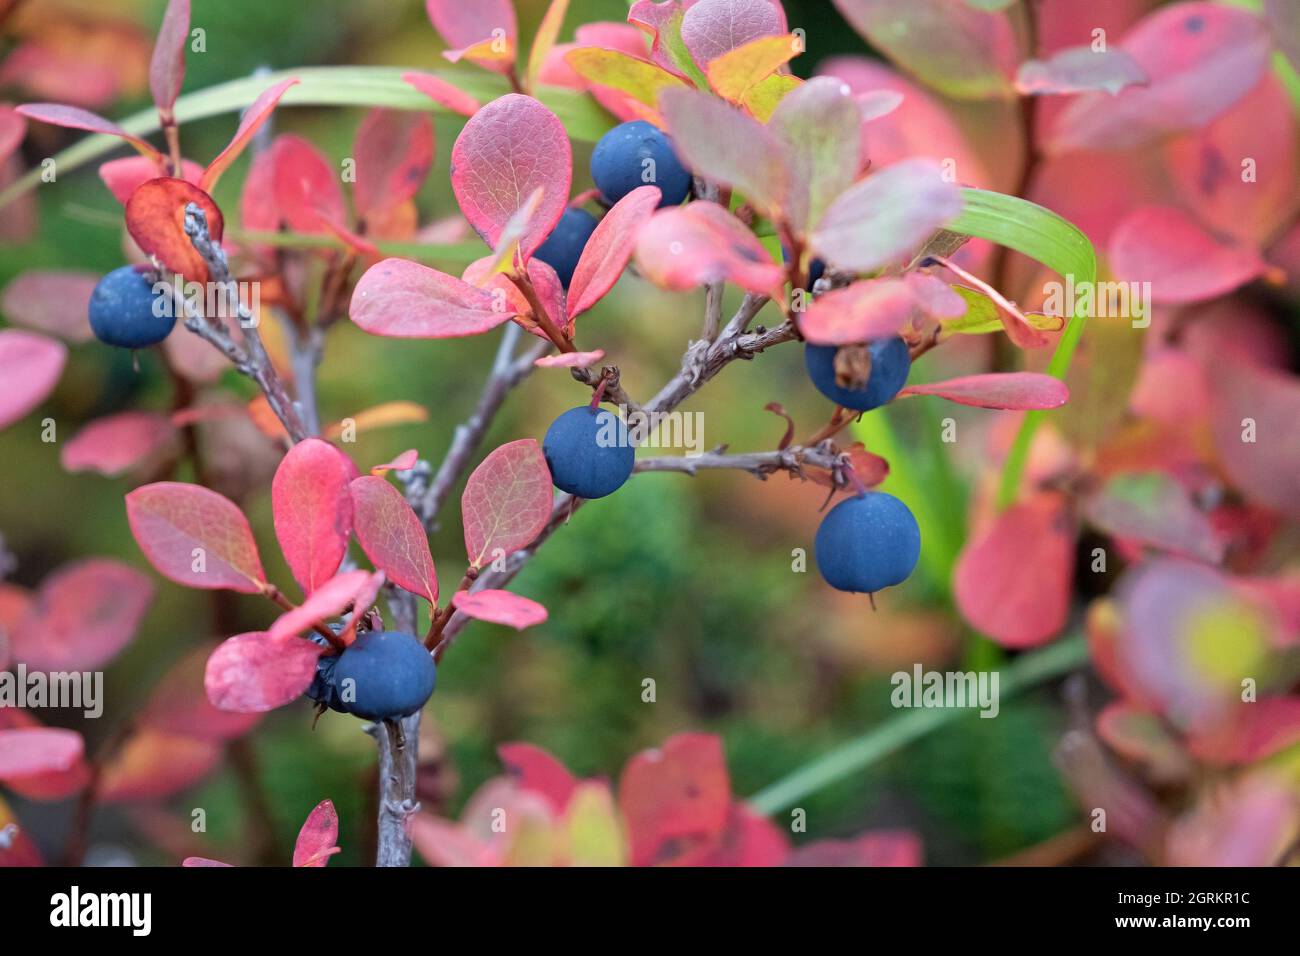 Wild Alaska blueberries hang ripe among the vibrantly colored foliage of autumn. Stock Photo